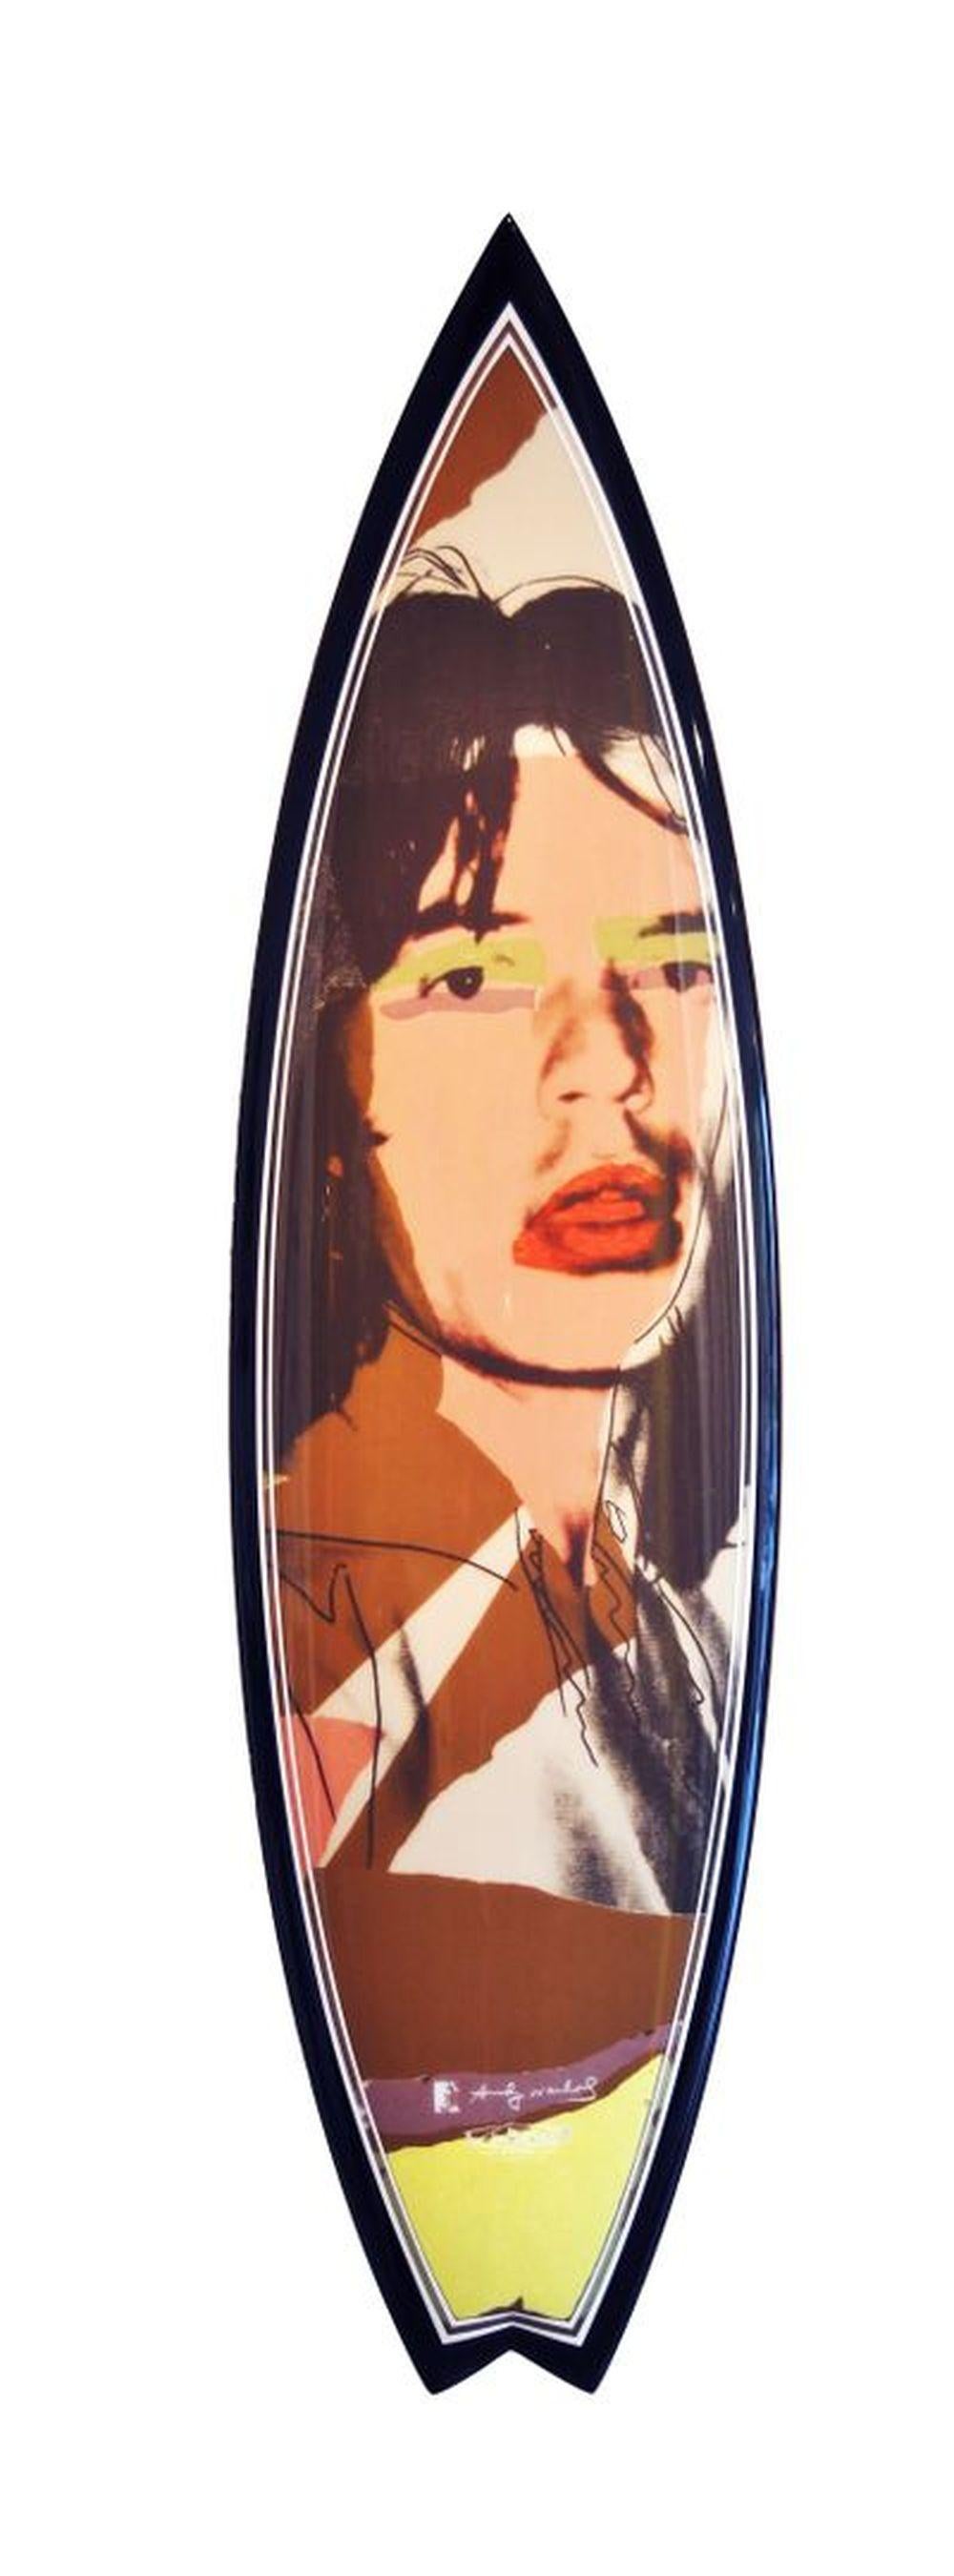 Tim Bessell Abstract Sculpture - Mick Jagger Andy Warhol Surfboard 